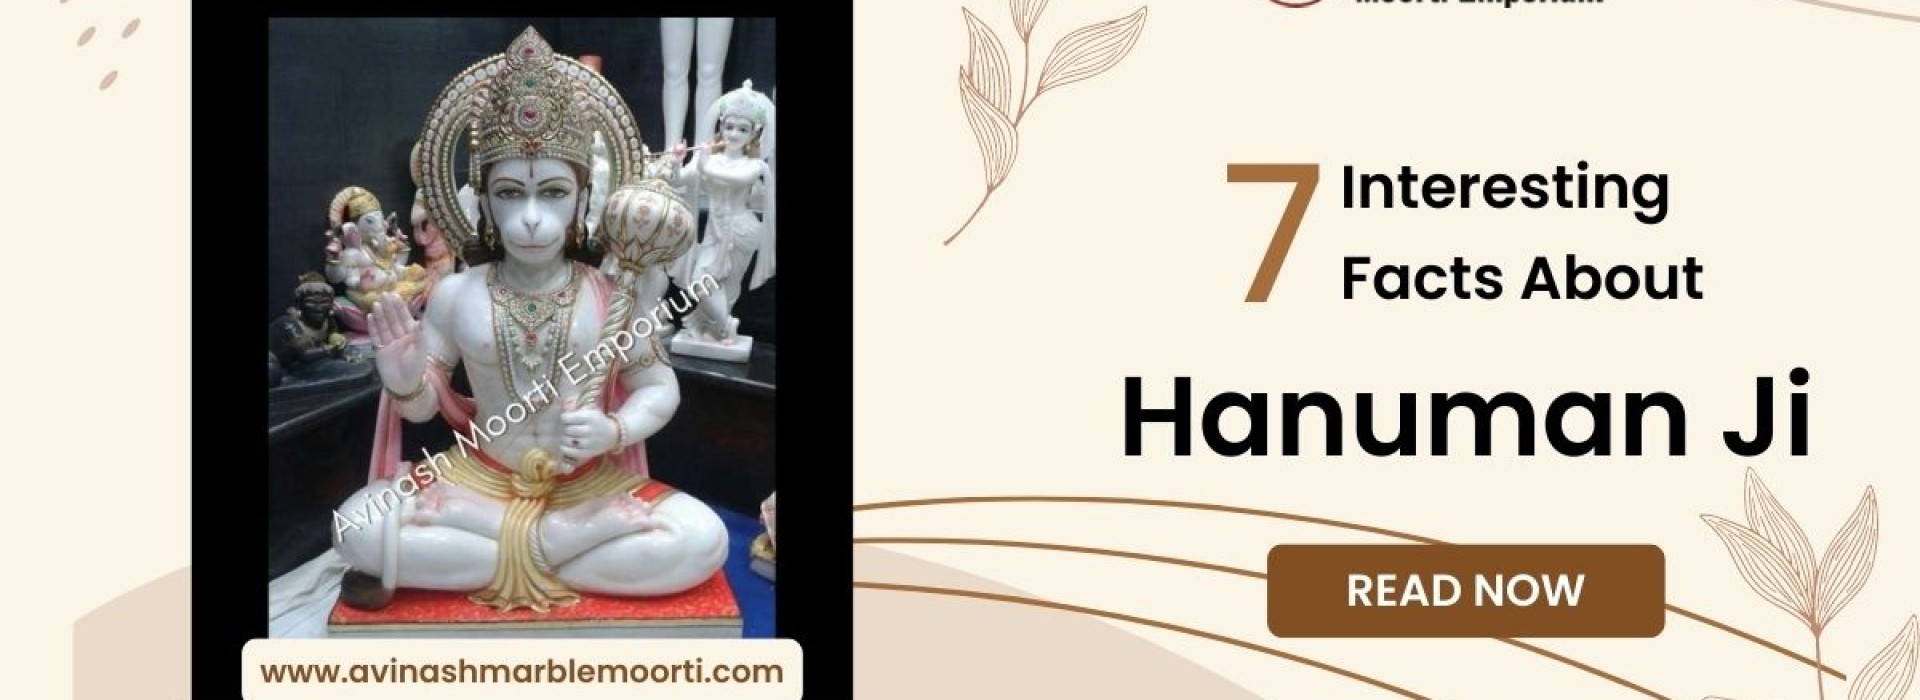 7 Interesting Facts About Hanuman Ji